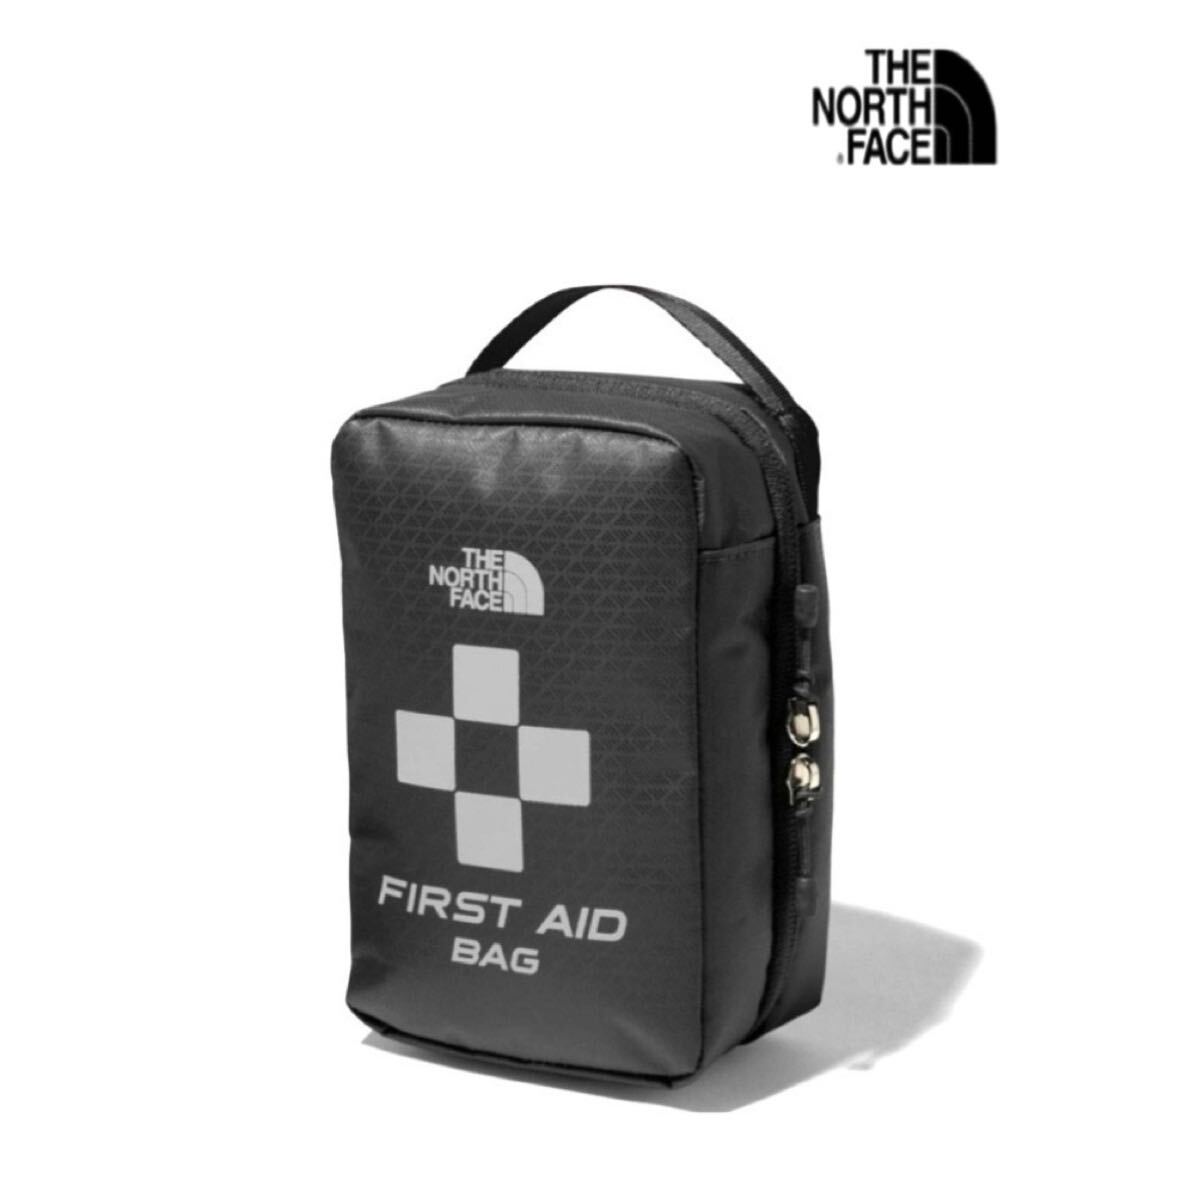 THE NORTH FACE First Aid BAG K NM92002 ノースフェイス ファーストエイドバッグ ブラック救急ポーチ メディカルポーチ 新品未使用の画像1